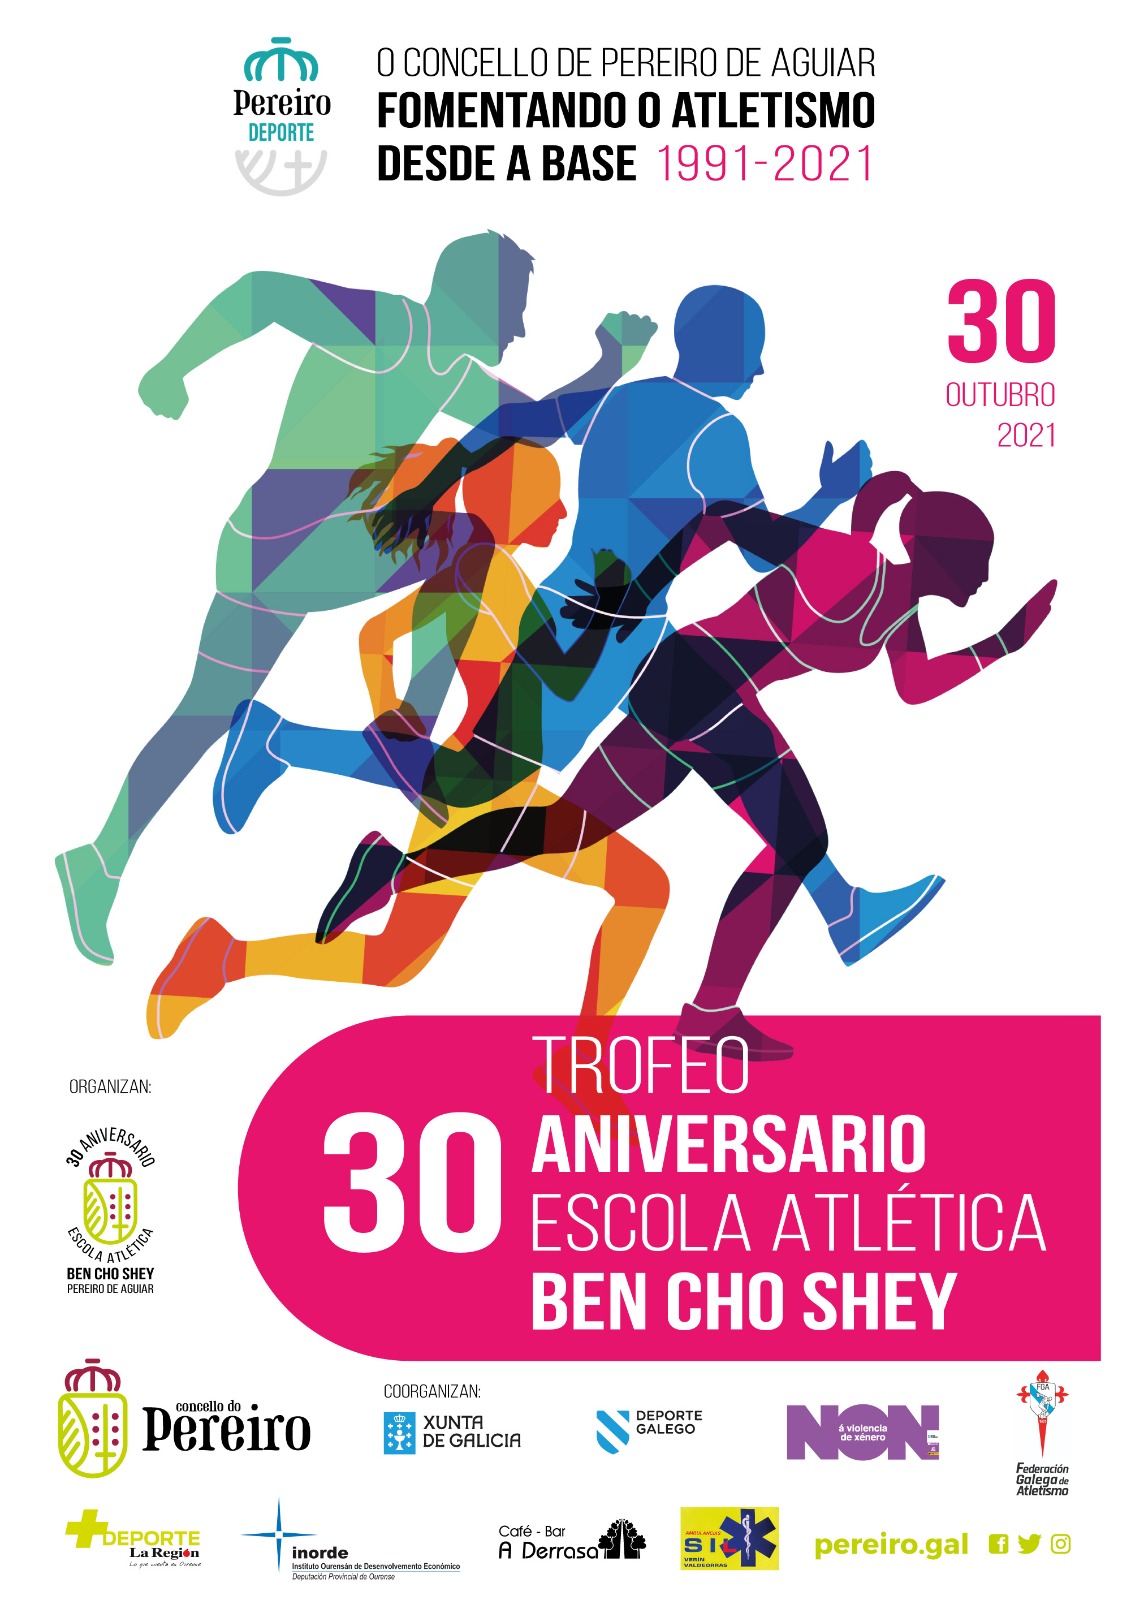 Trofeo Aniversario Escola Atlética Ben Cho Shey 2021